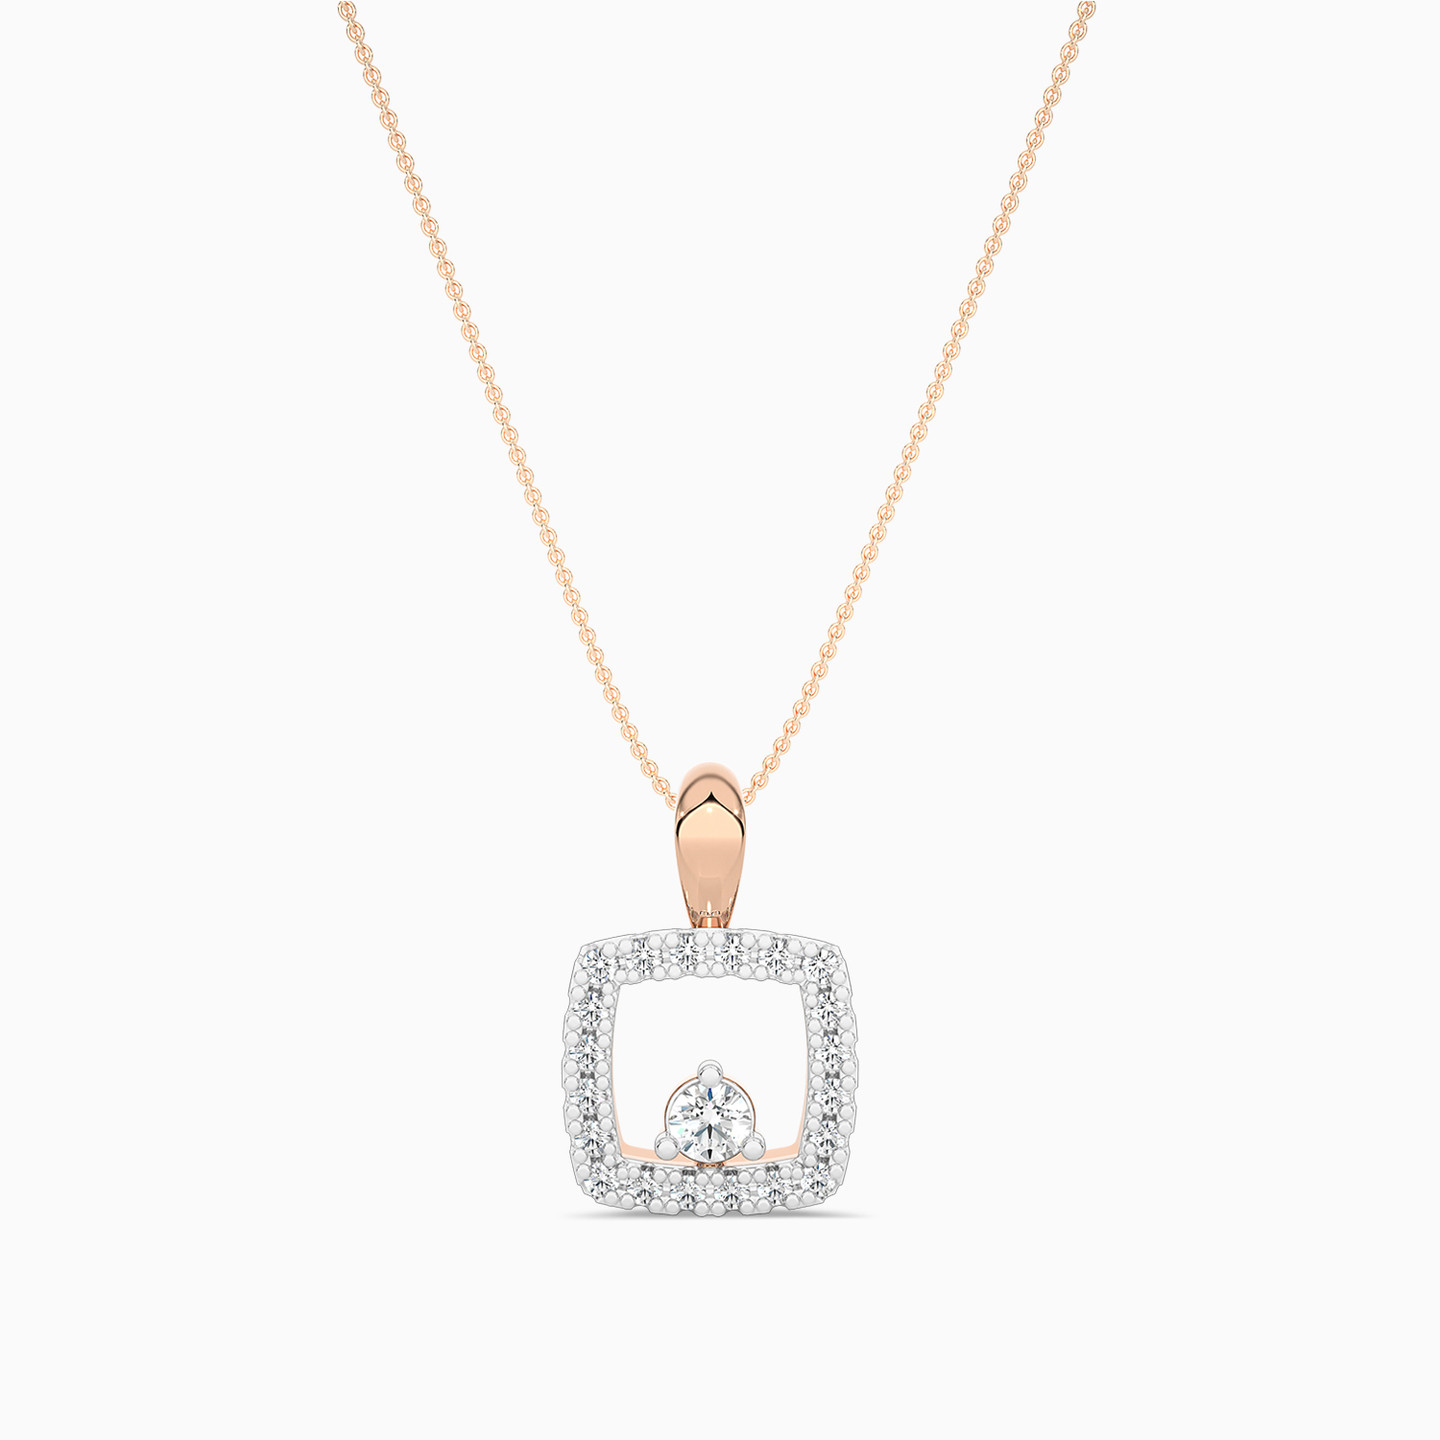 18K Gold Diamond Pendant Necklace - 2